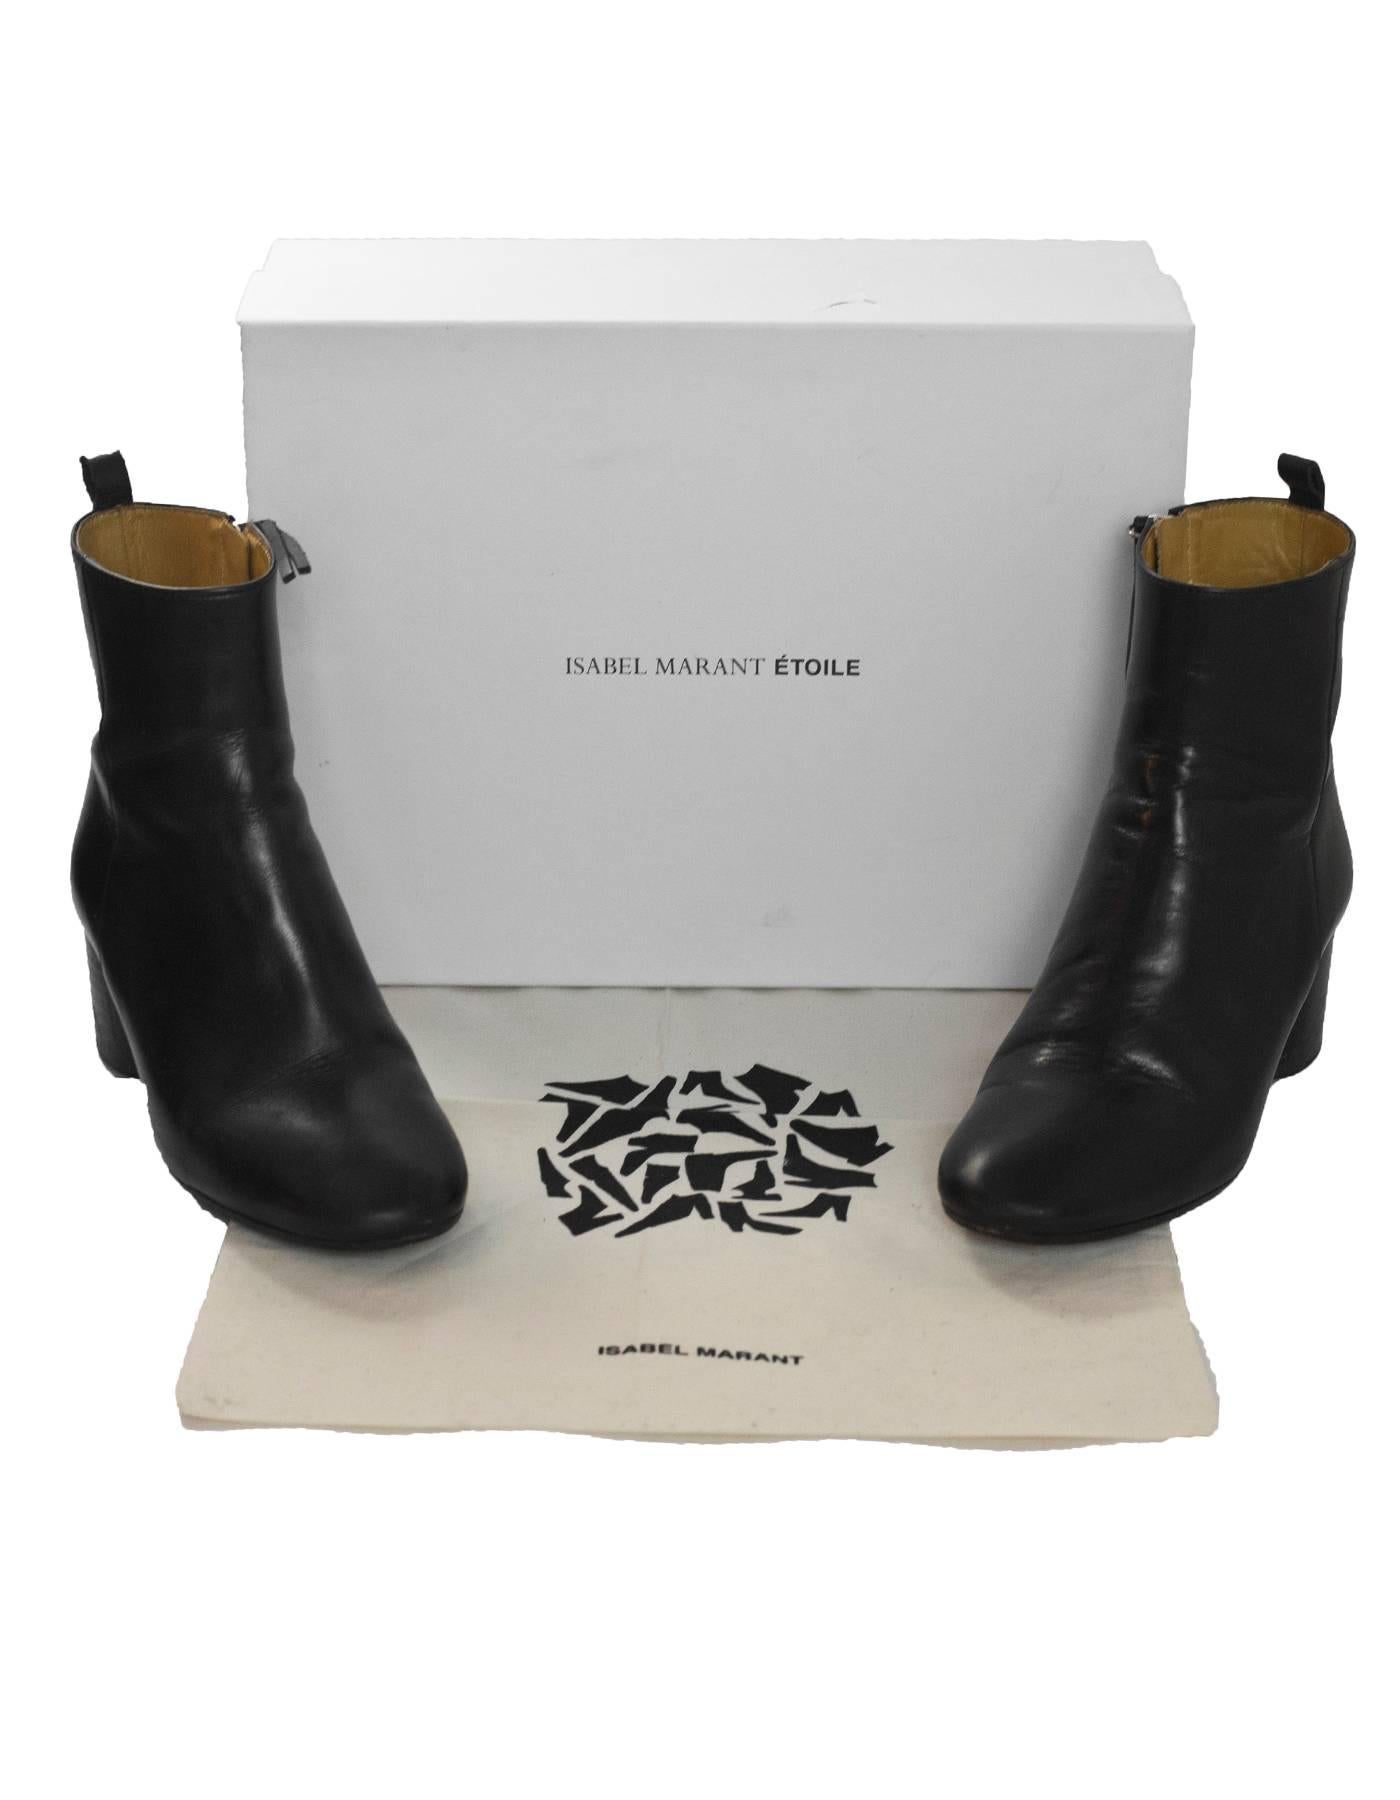 Etoile Isabel Marant Black Leather Deyissa Ankle Boots Sz 36 with Box 2